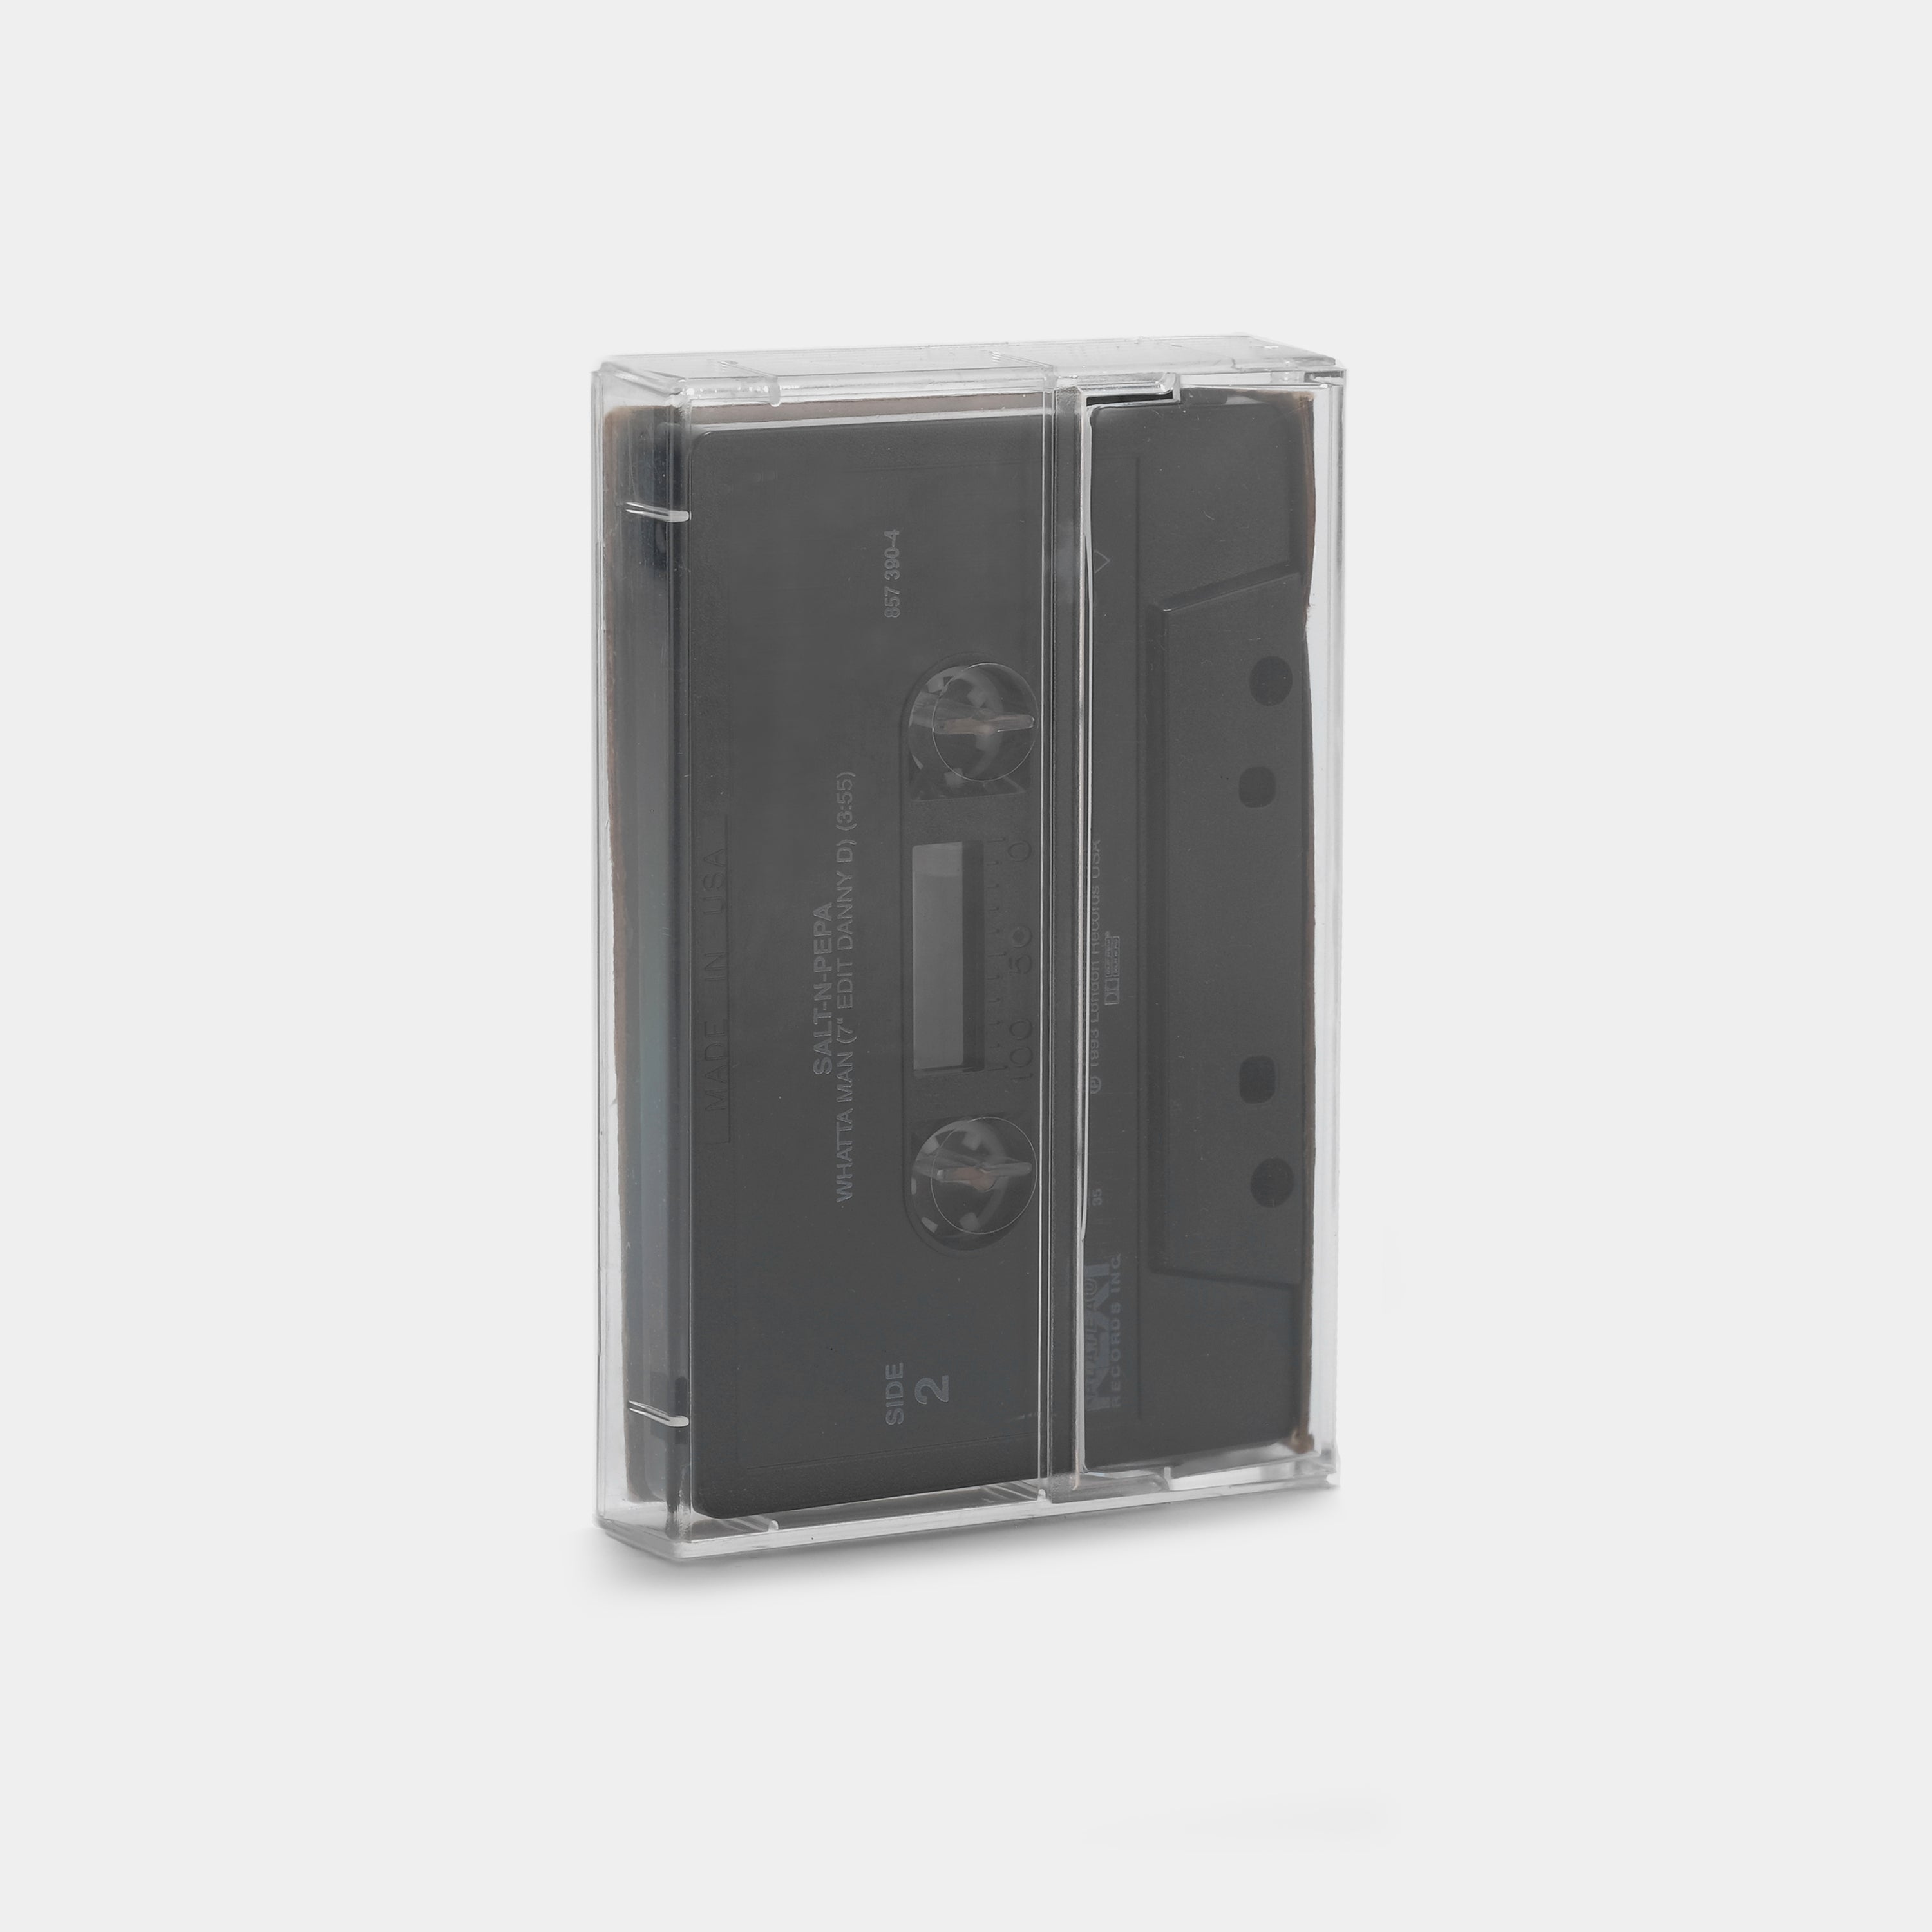 Salt N' Pepa - Whatta Man Cassette Tape